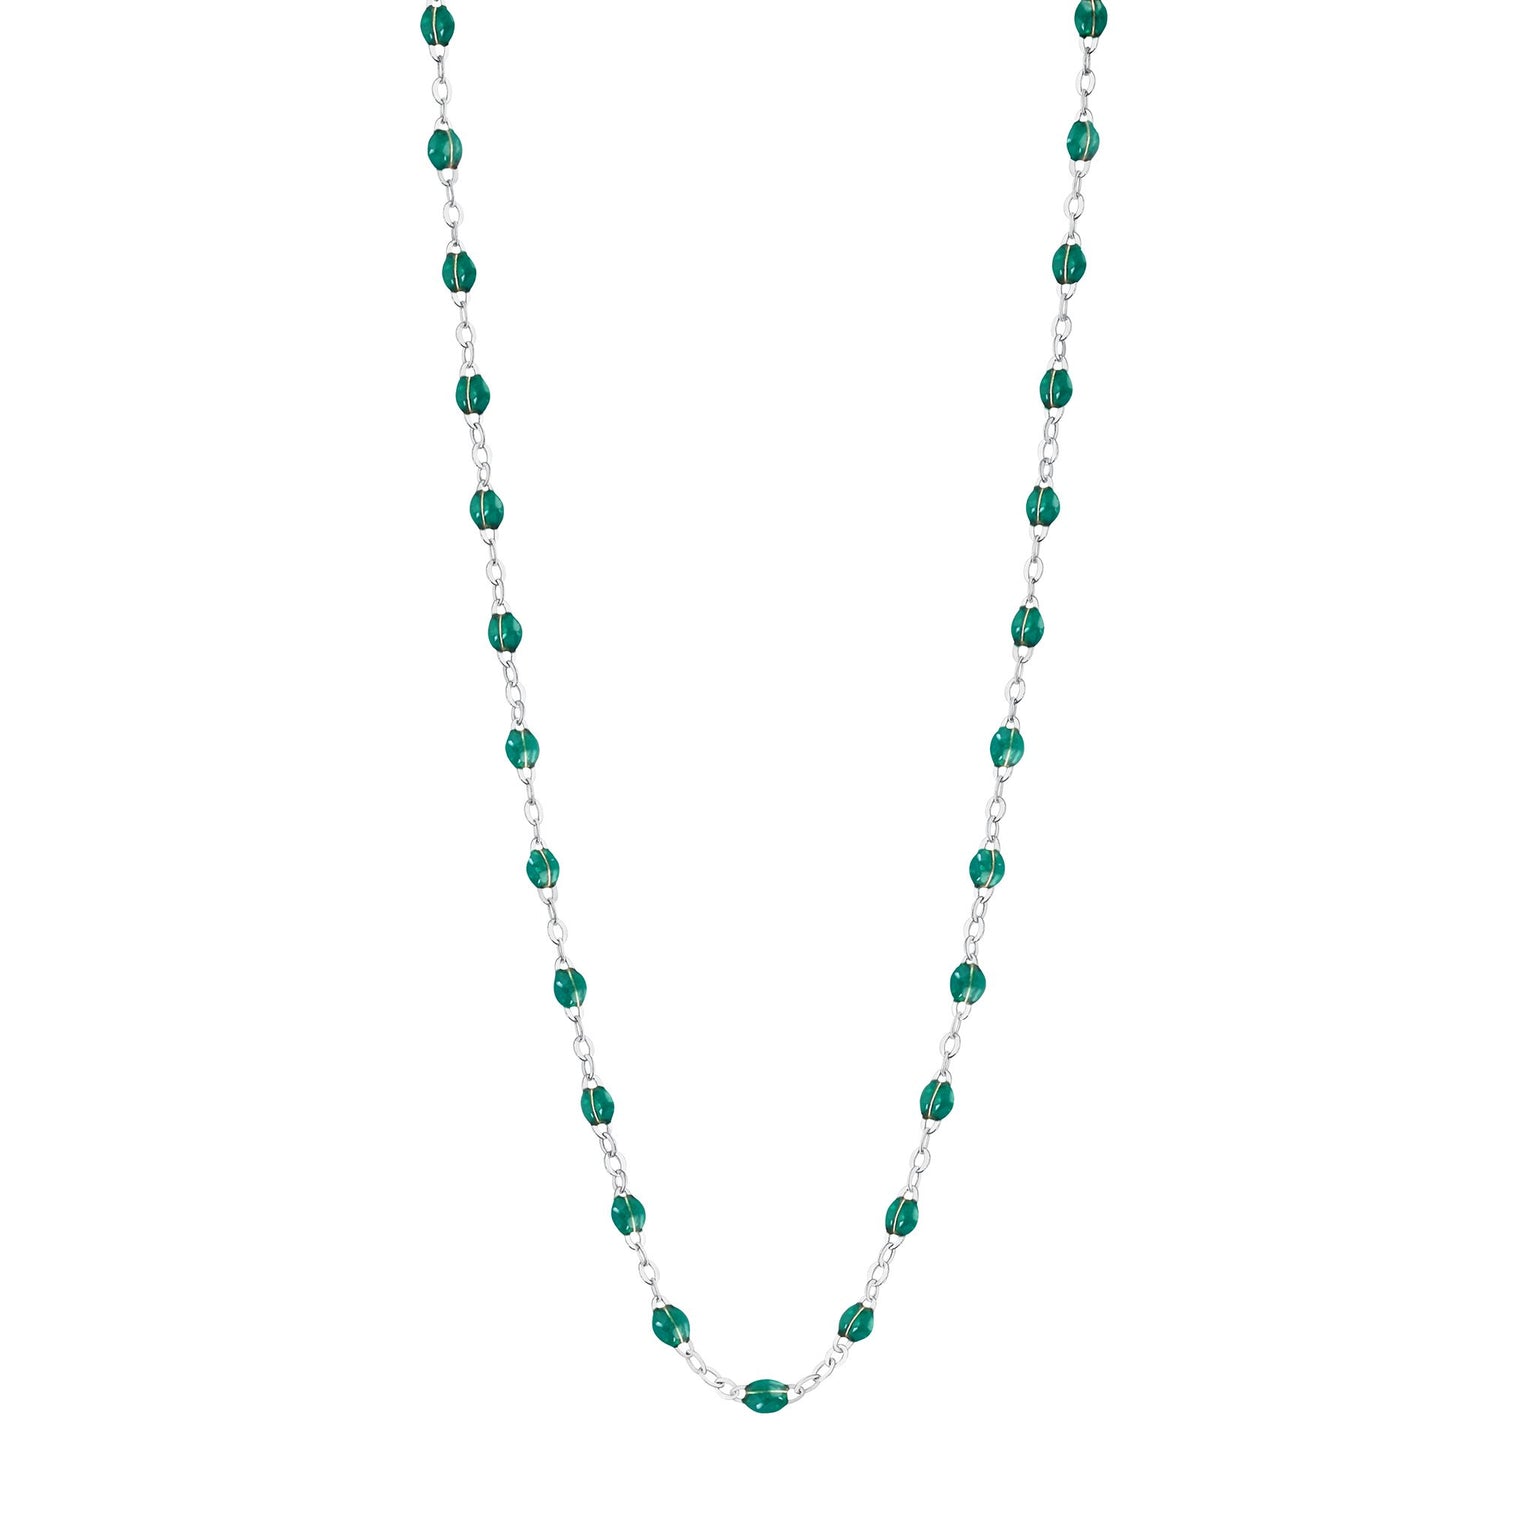 Beleza Necklace with Heart Emerald, I Diamond | 0.91 carats Heart Emerald  Heart Pendant in 14k White Gold | Diamondere